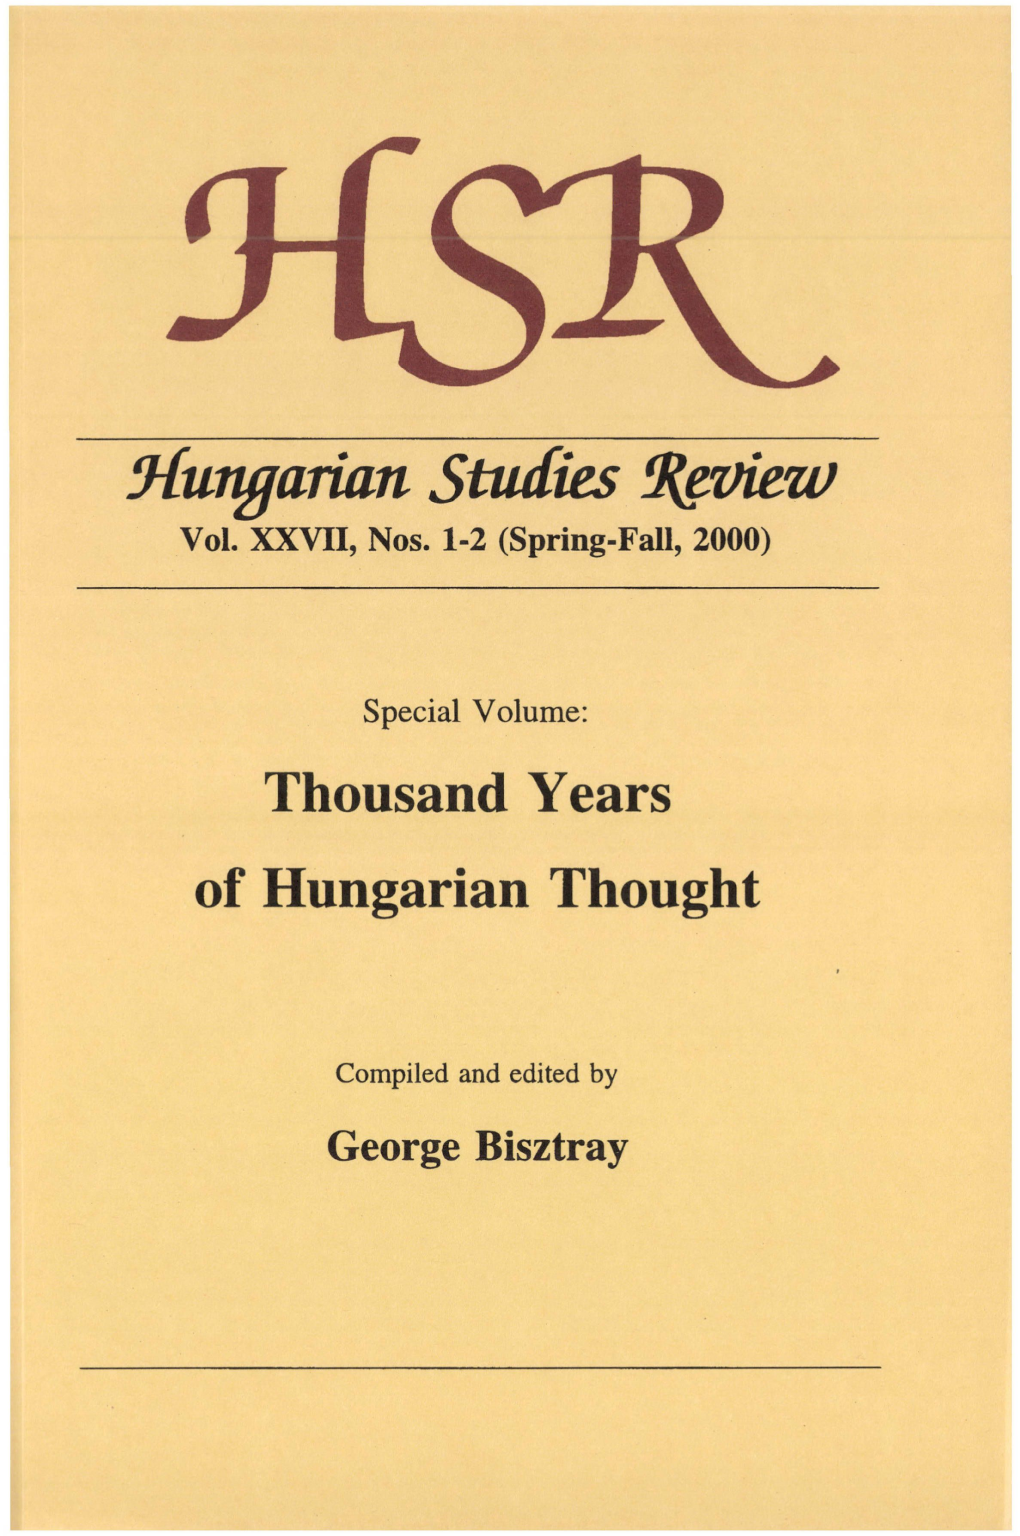 Hungarian Studies 'Heviezu Vol